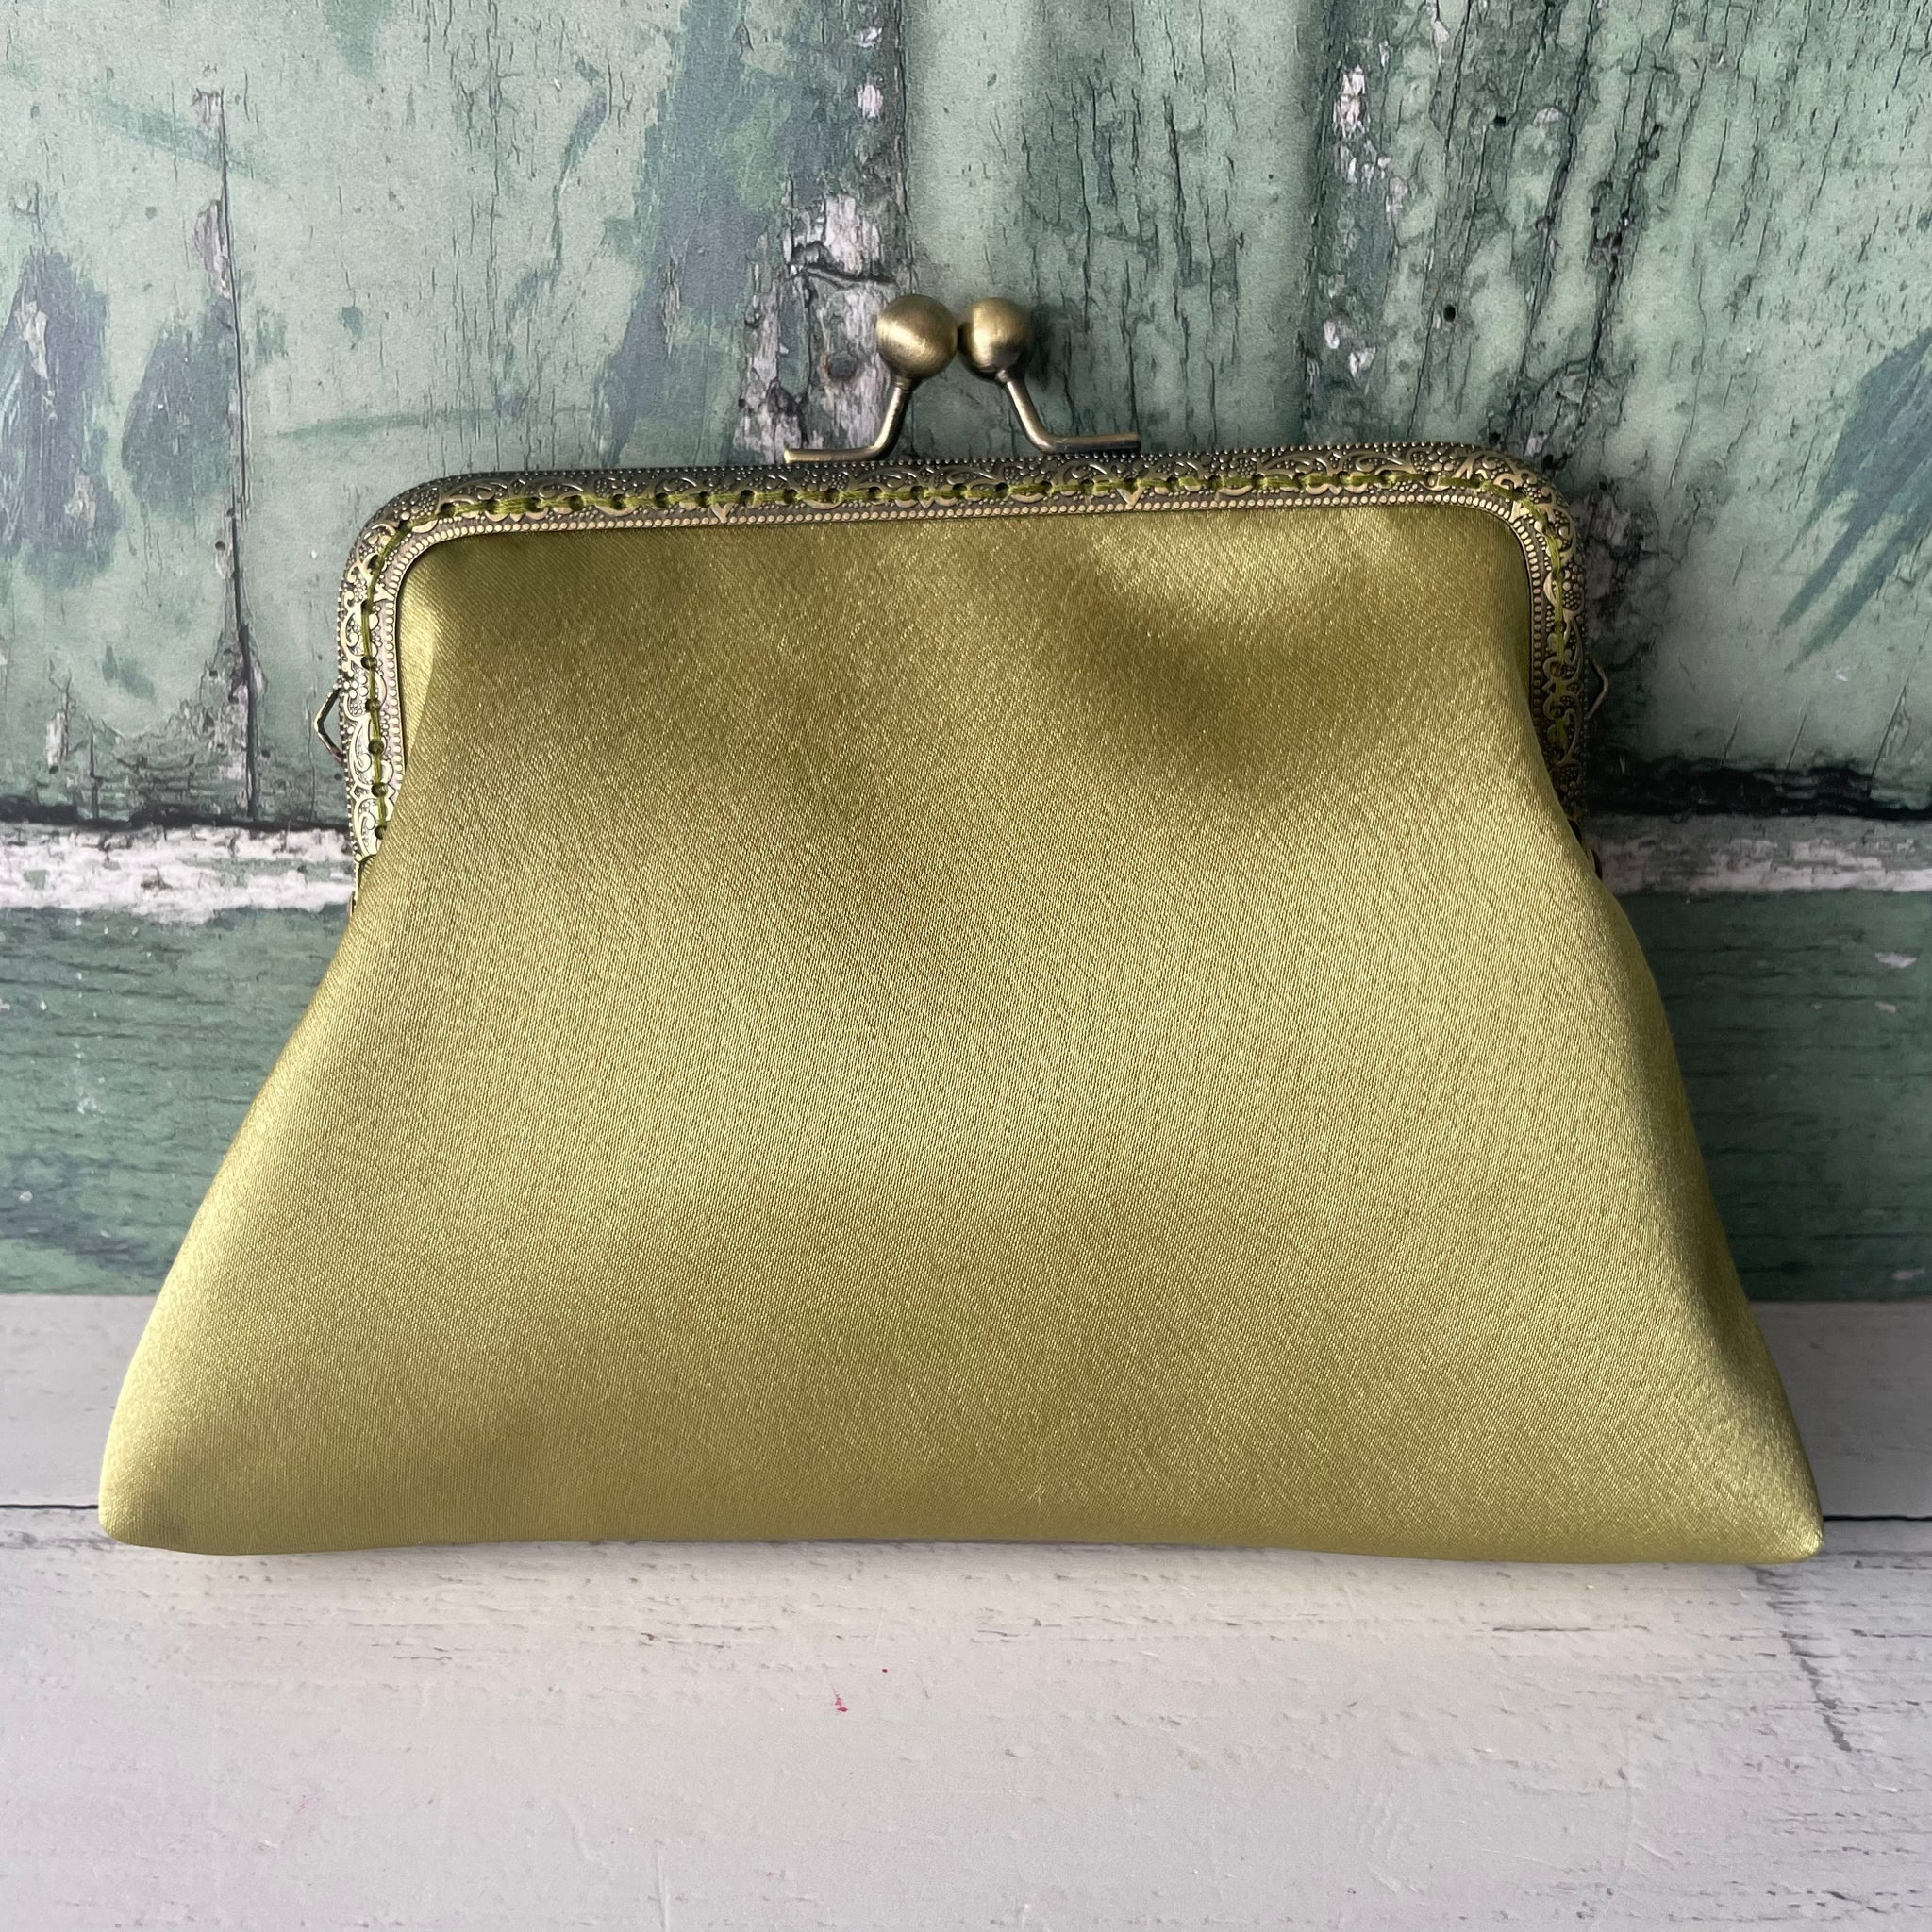 Pistachio Green Satin 5.5 Inch Clasp Purse Frame Clutch Bag